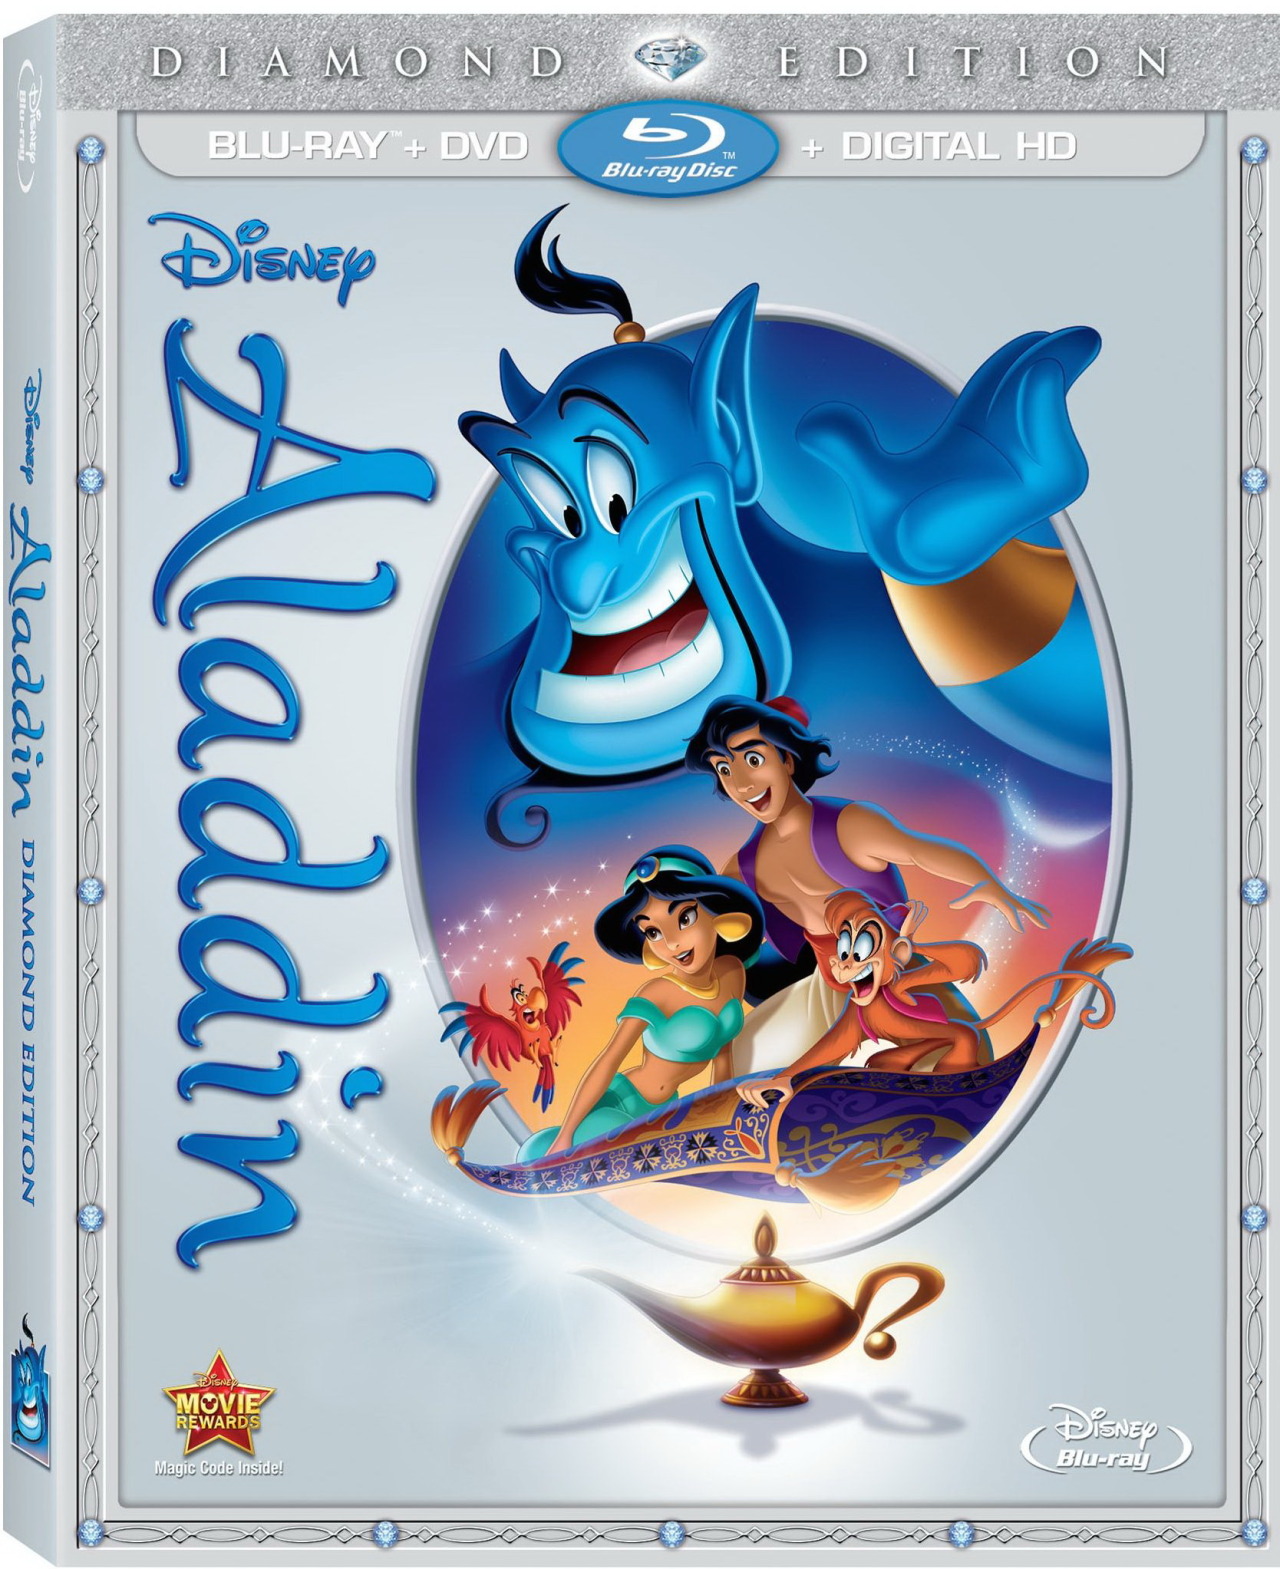 Les jaquettes DVD et Blu-ray des futurs Disney - Page 9 Tumblr_nq44qgVtqj1qa2r95o2_1280